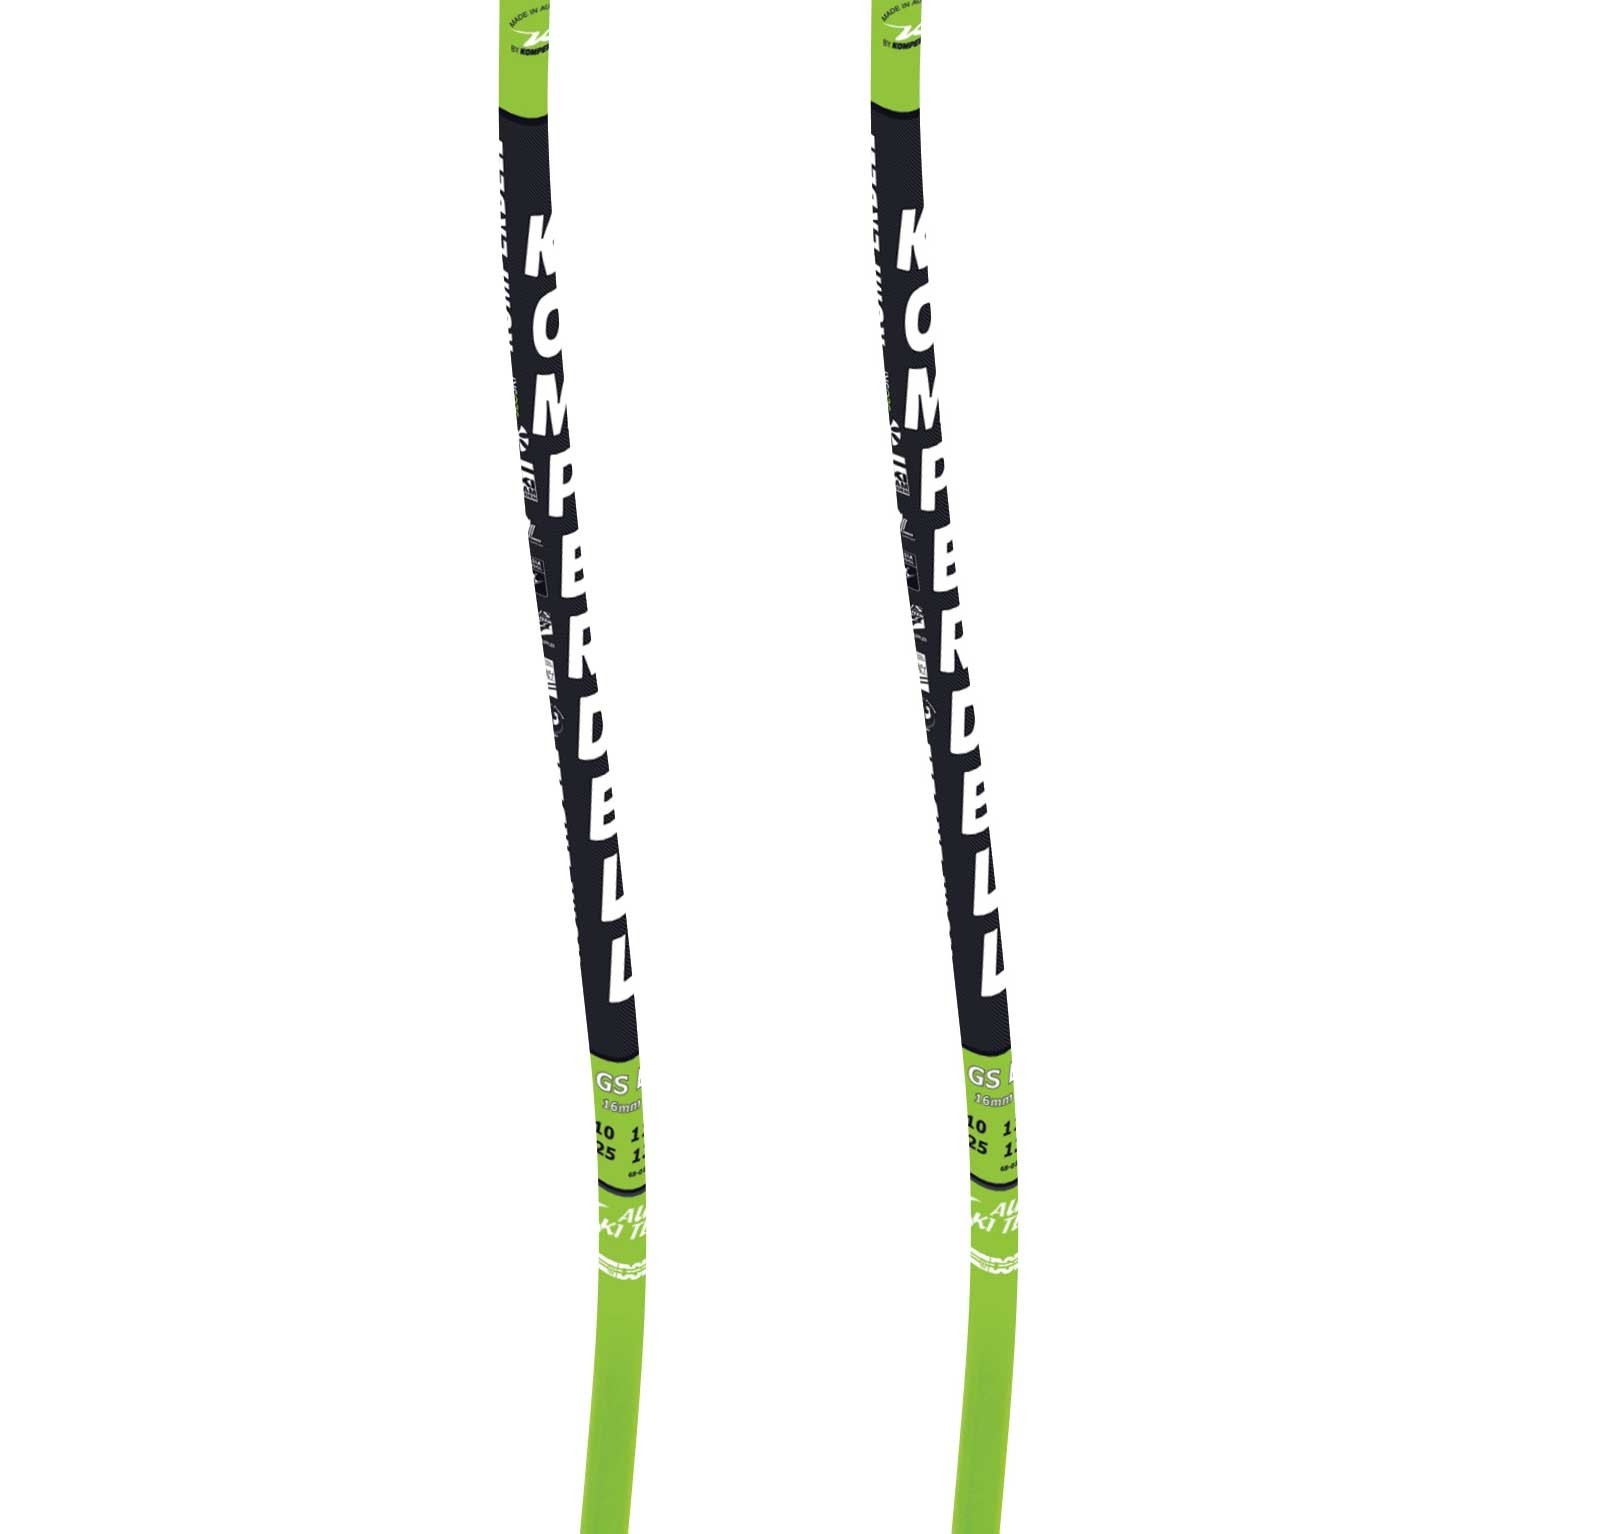 Komperdell Nationalteam Carbon GS Bent ski poles